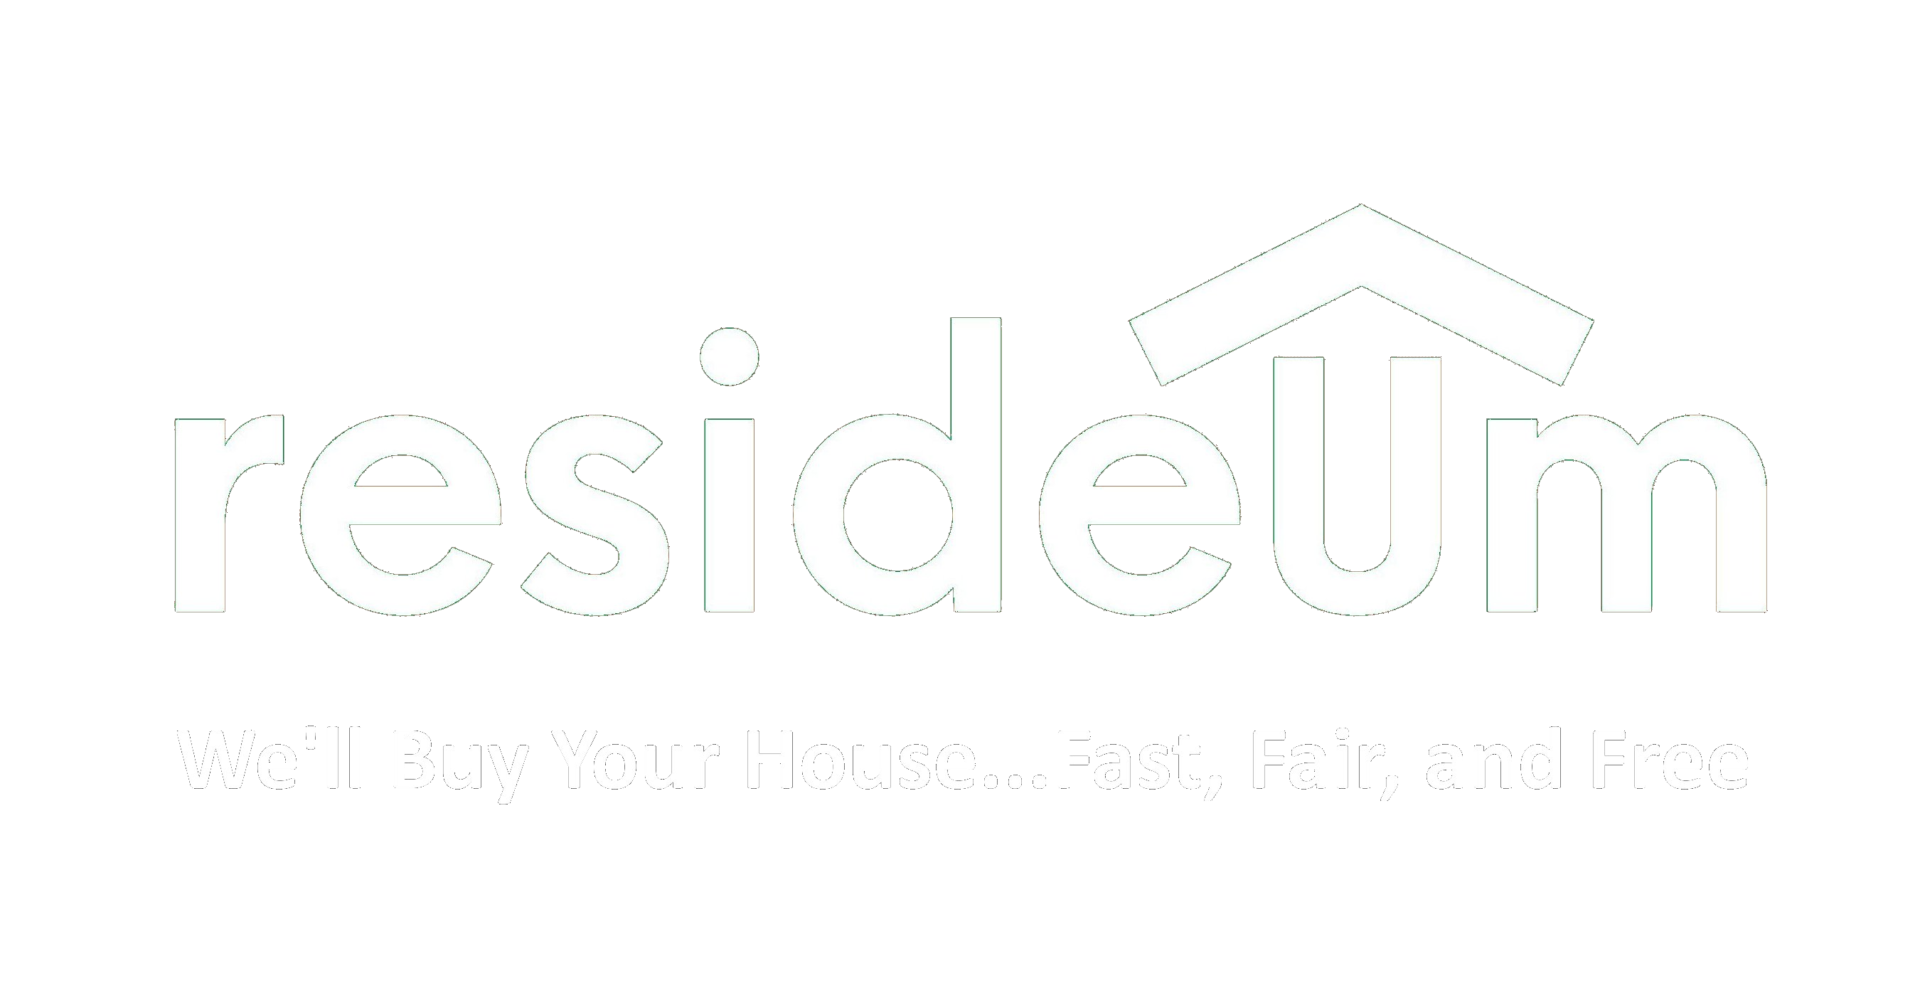 Resideum Buys Houses in Metro Atlanta logo